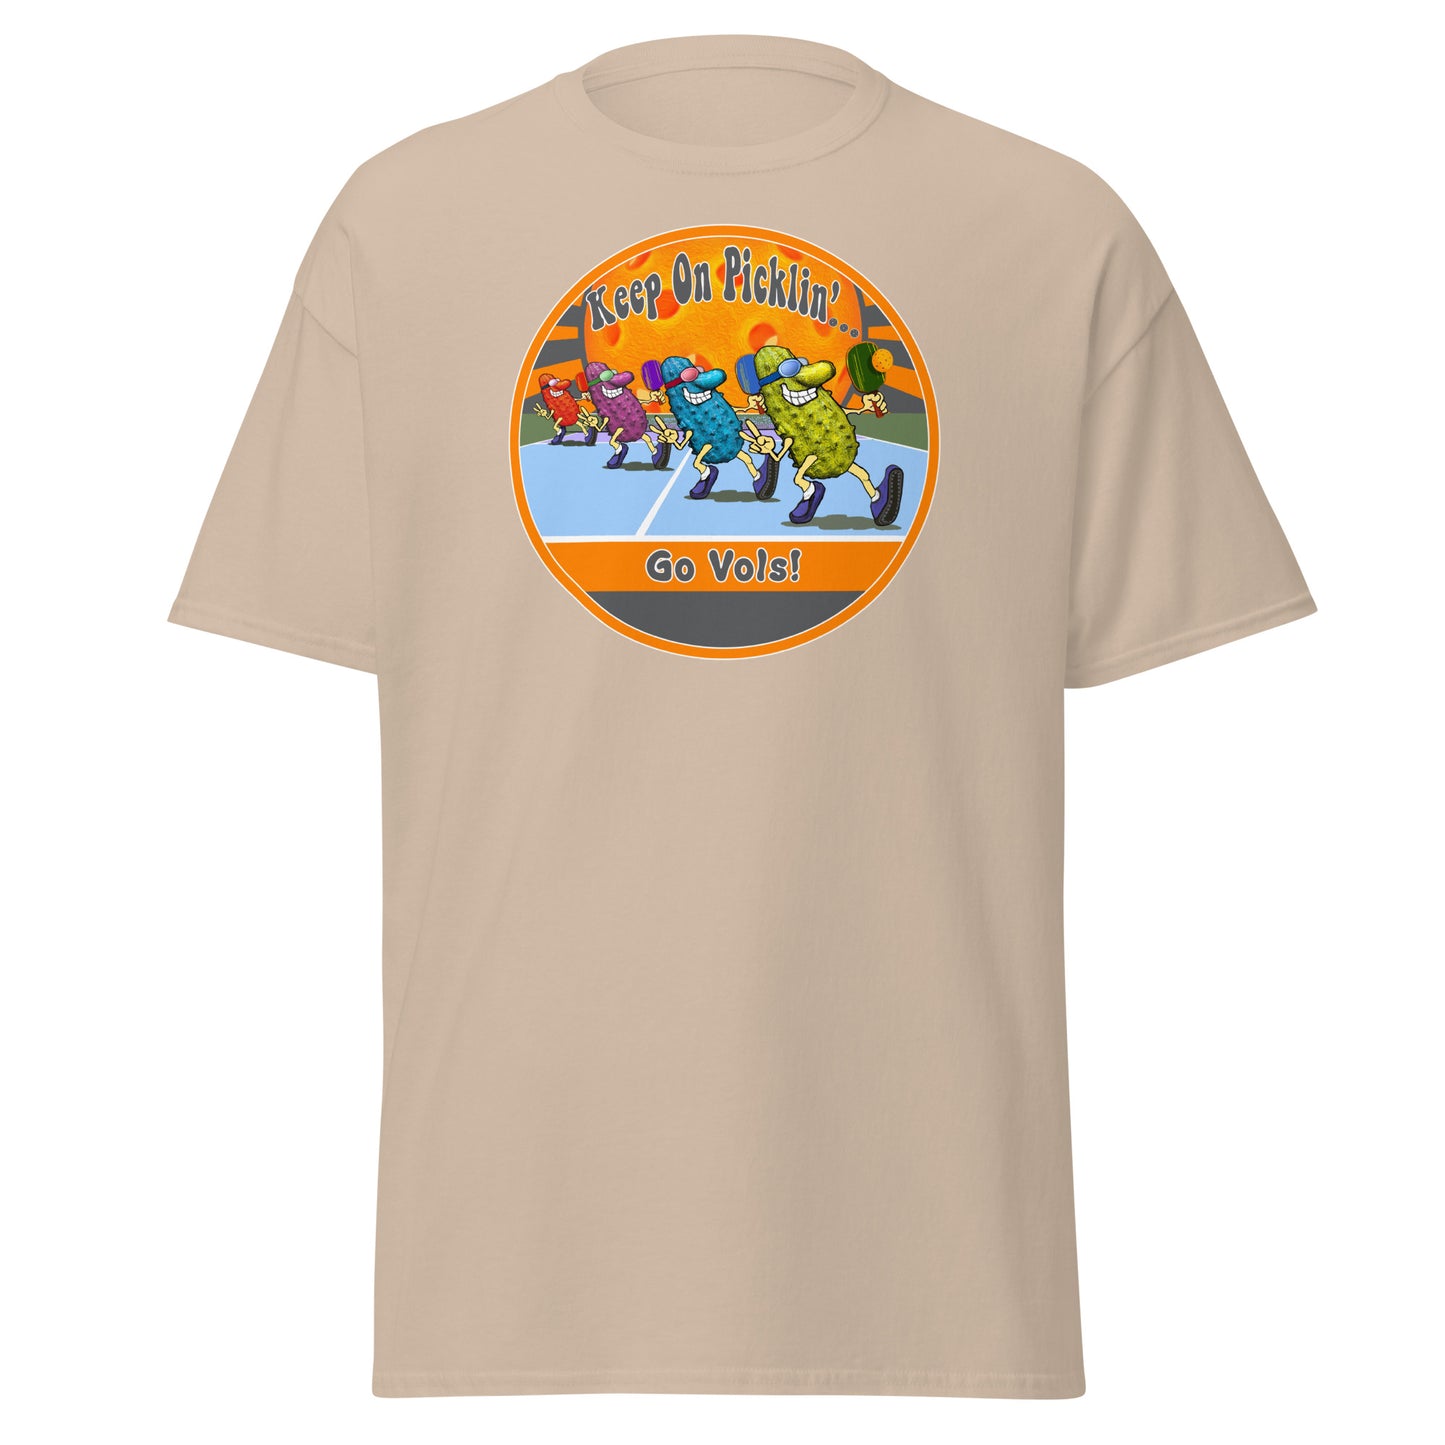 Tennessee Volunteers Pickleball Shirt, Short-sleeve Tee, Pickleball Sun Graphic